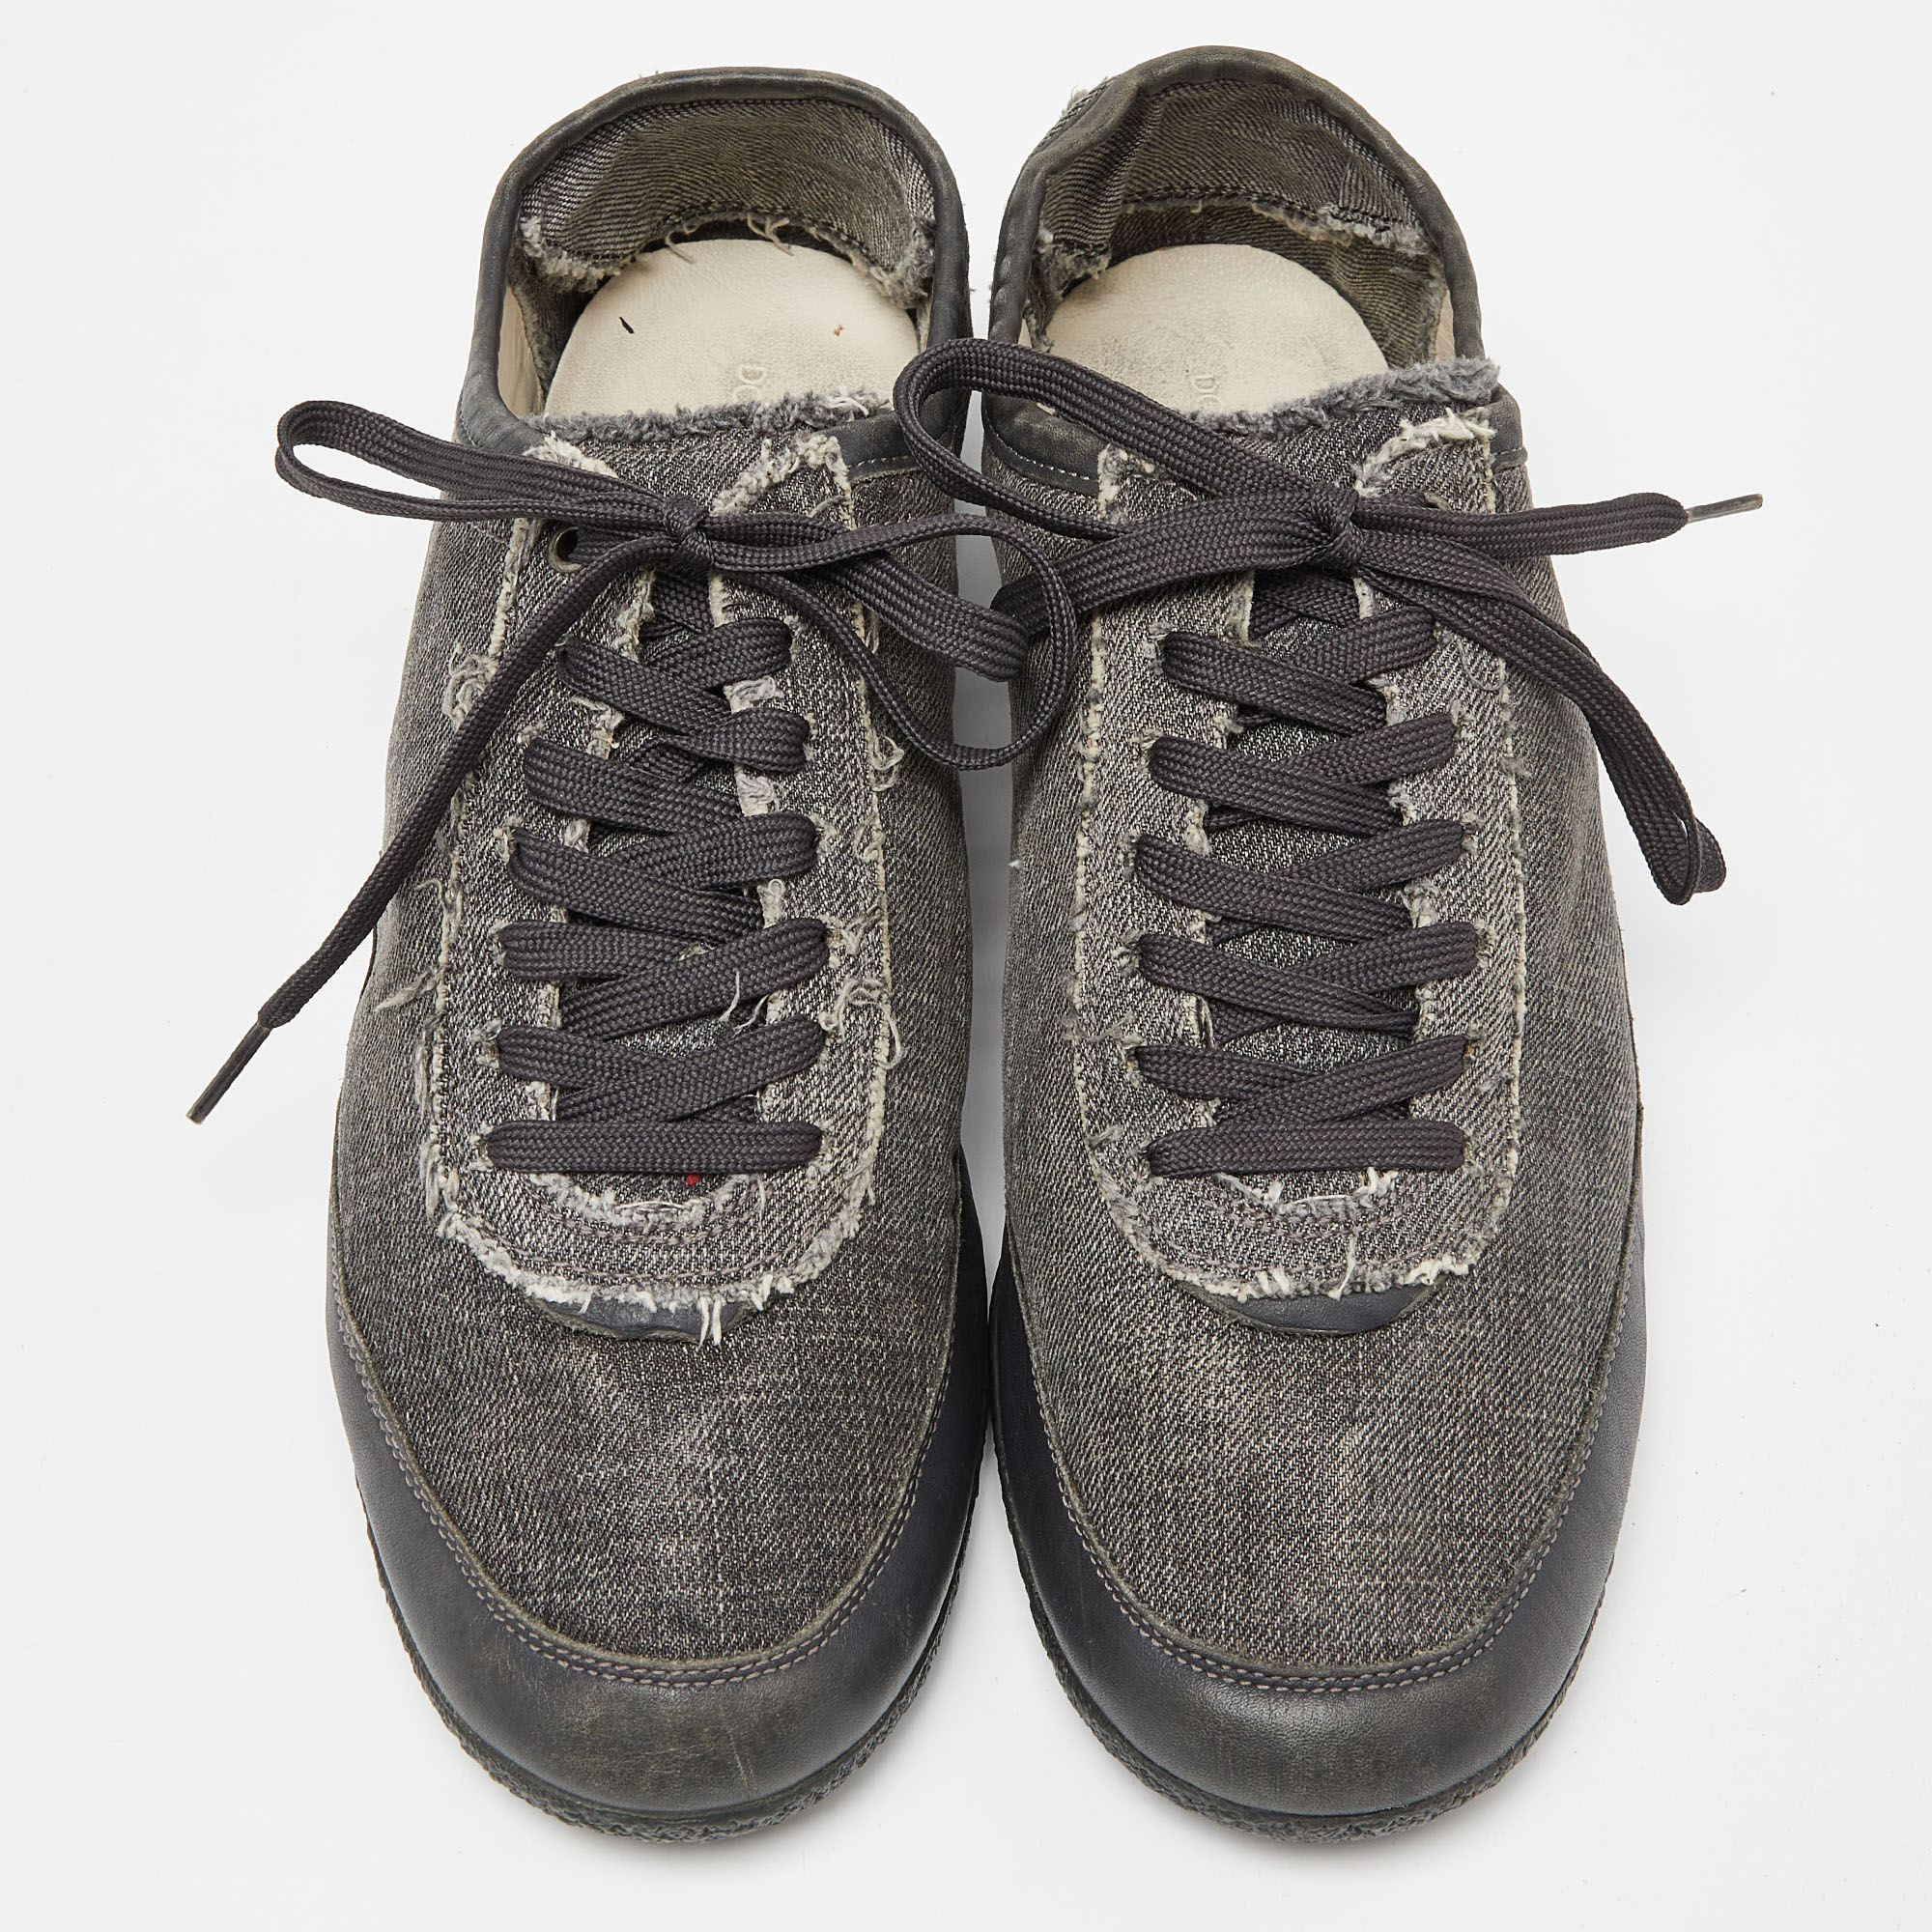 Dolce & Gabbana Dark Grey Denim Lace Up Sneakers Size 45